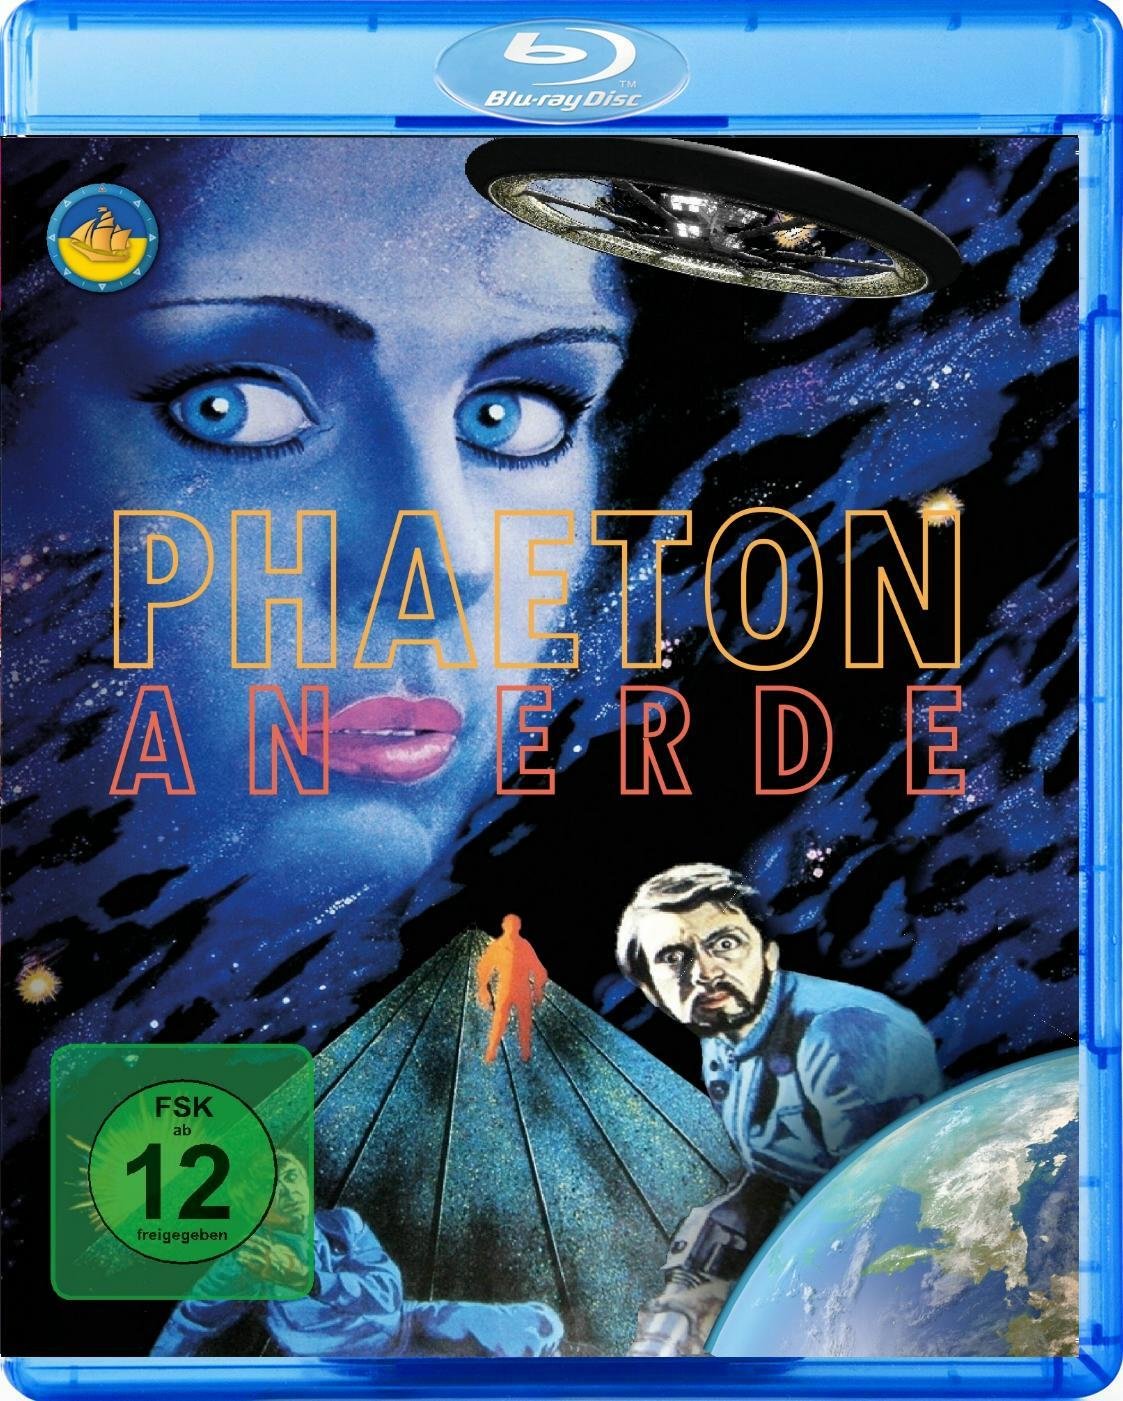 Phaeton an Erde - Limited Edition (blu-ray)